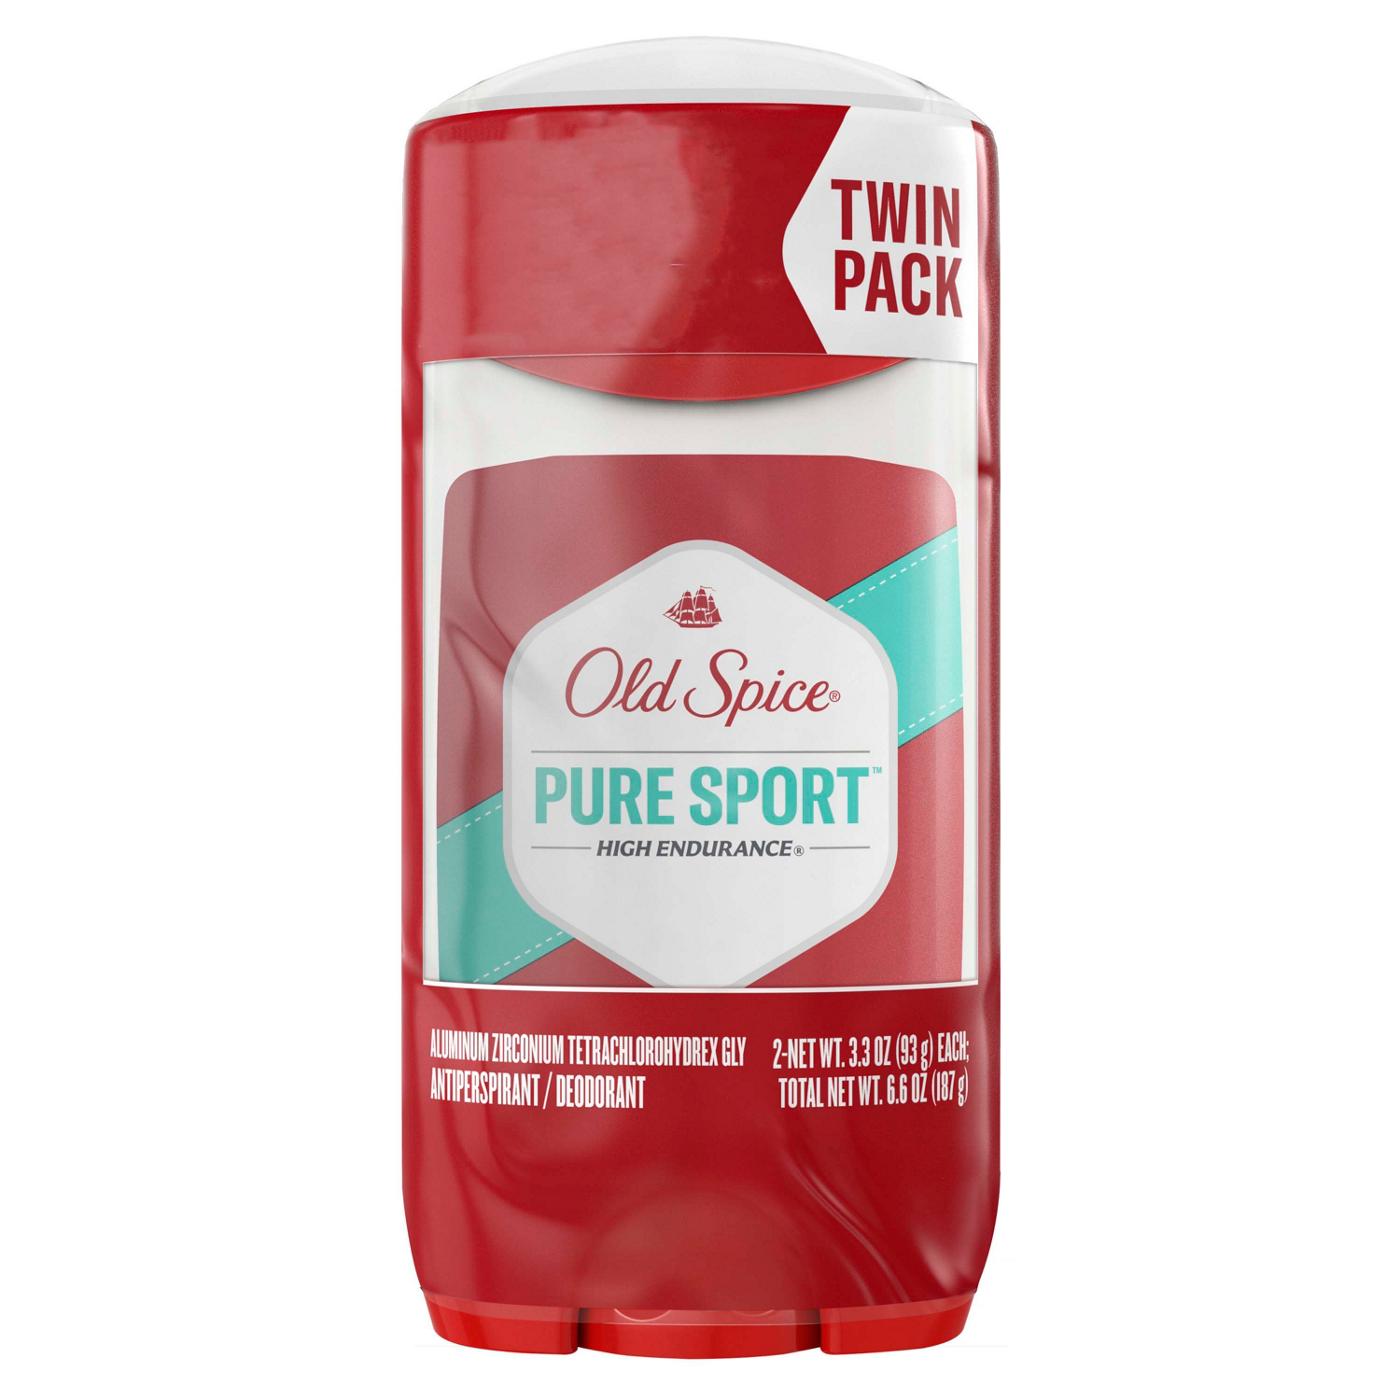 Old Spice High Endurance Antiperspirant Deodorant - Pure Sport; image 1 of 2